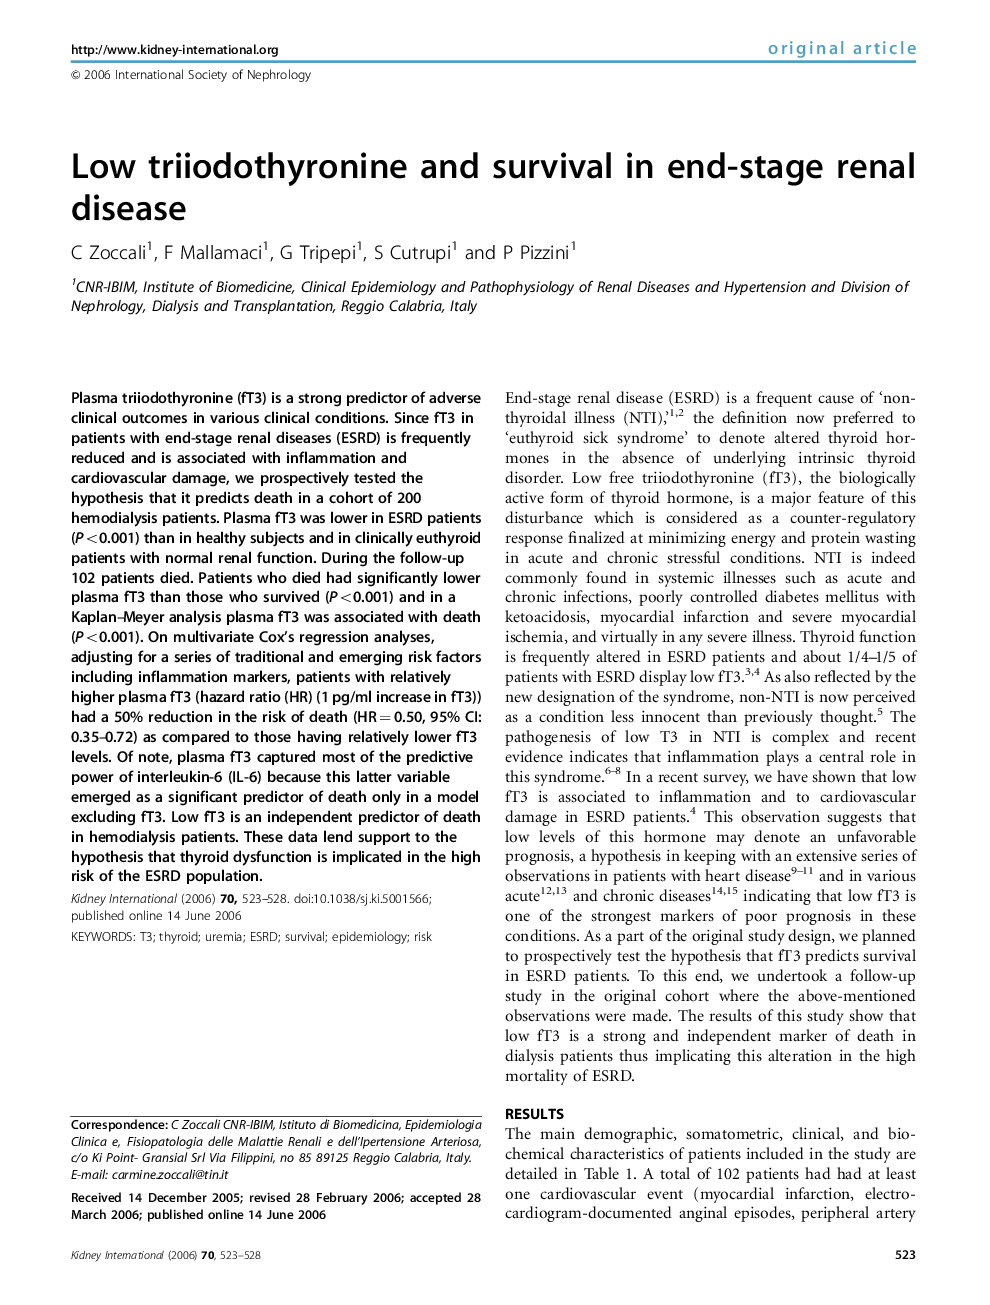 Low triiodothyronine and survival in end-stage renal disease